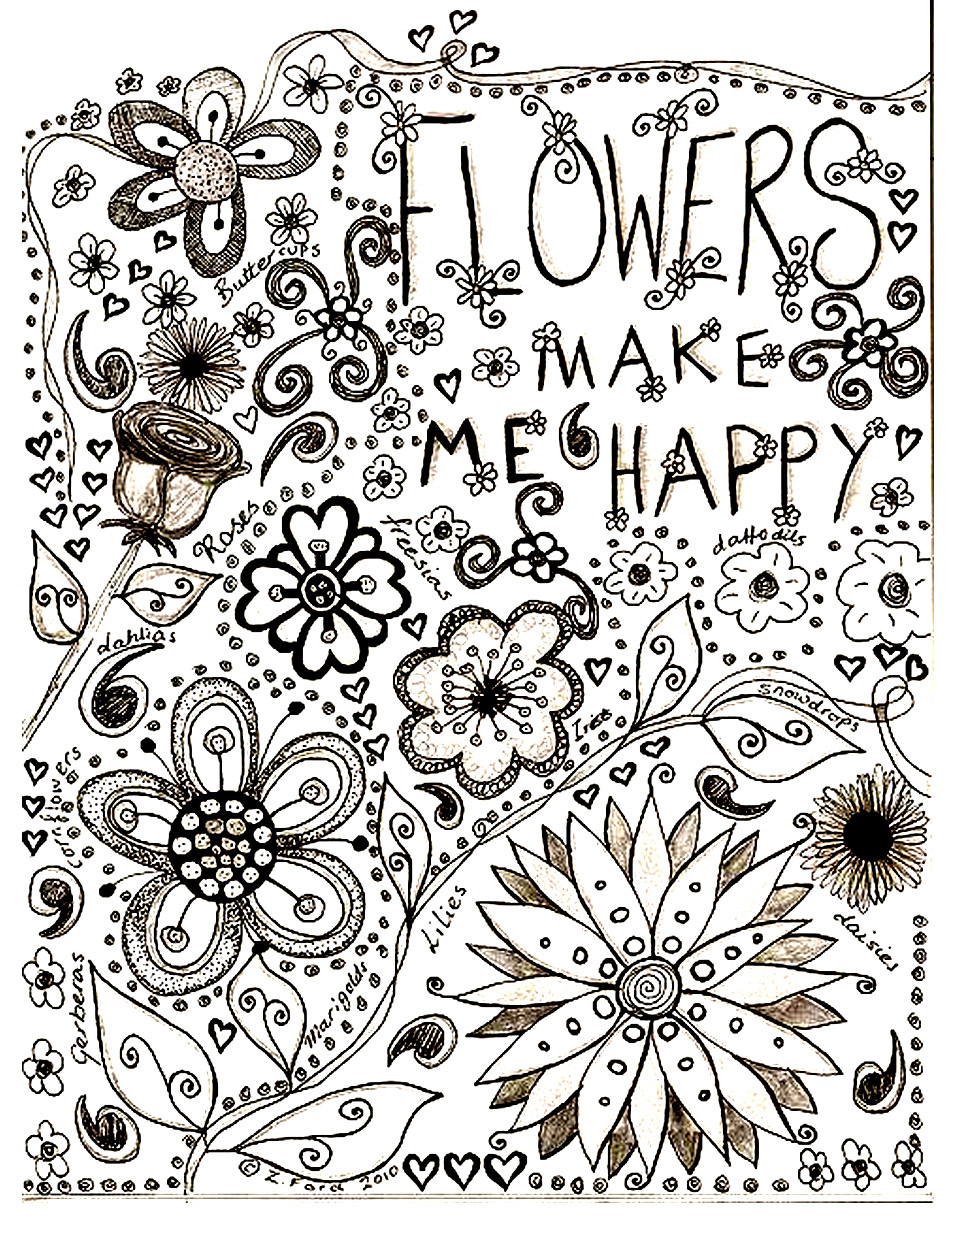 'Flowers make me happy' !!